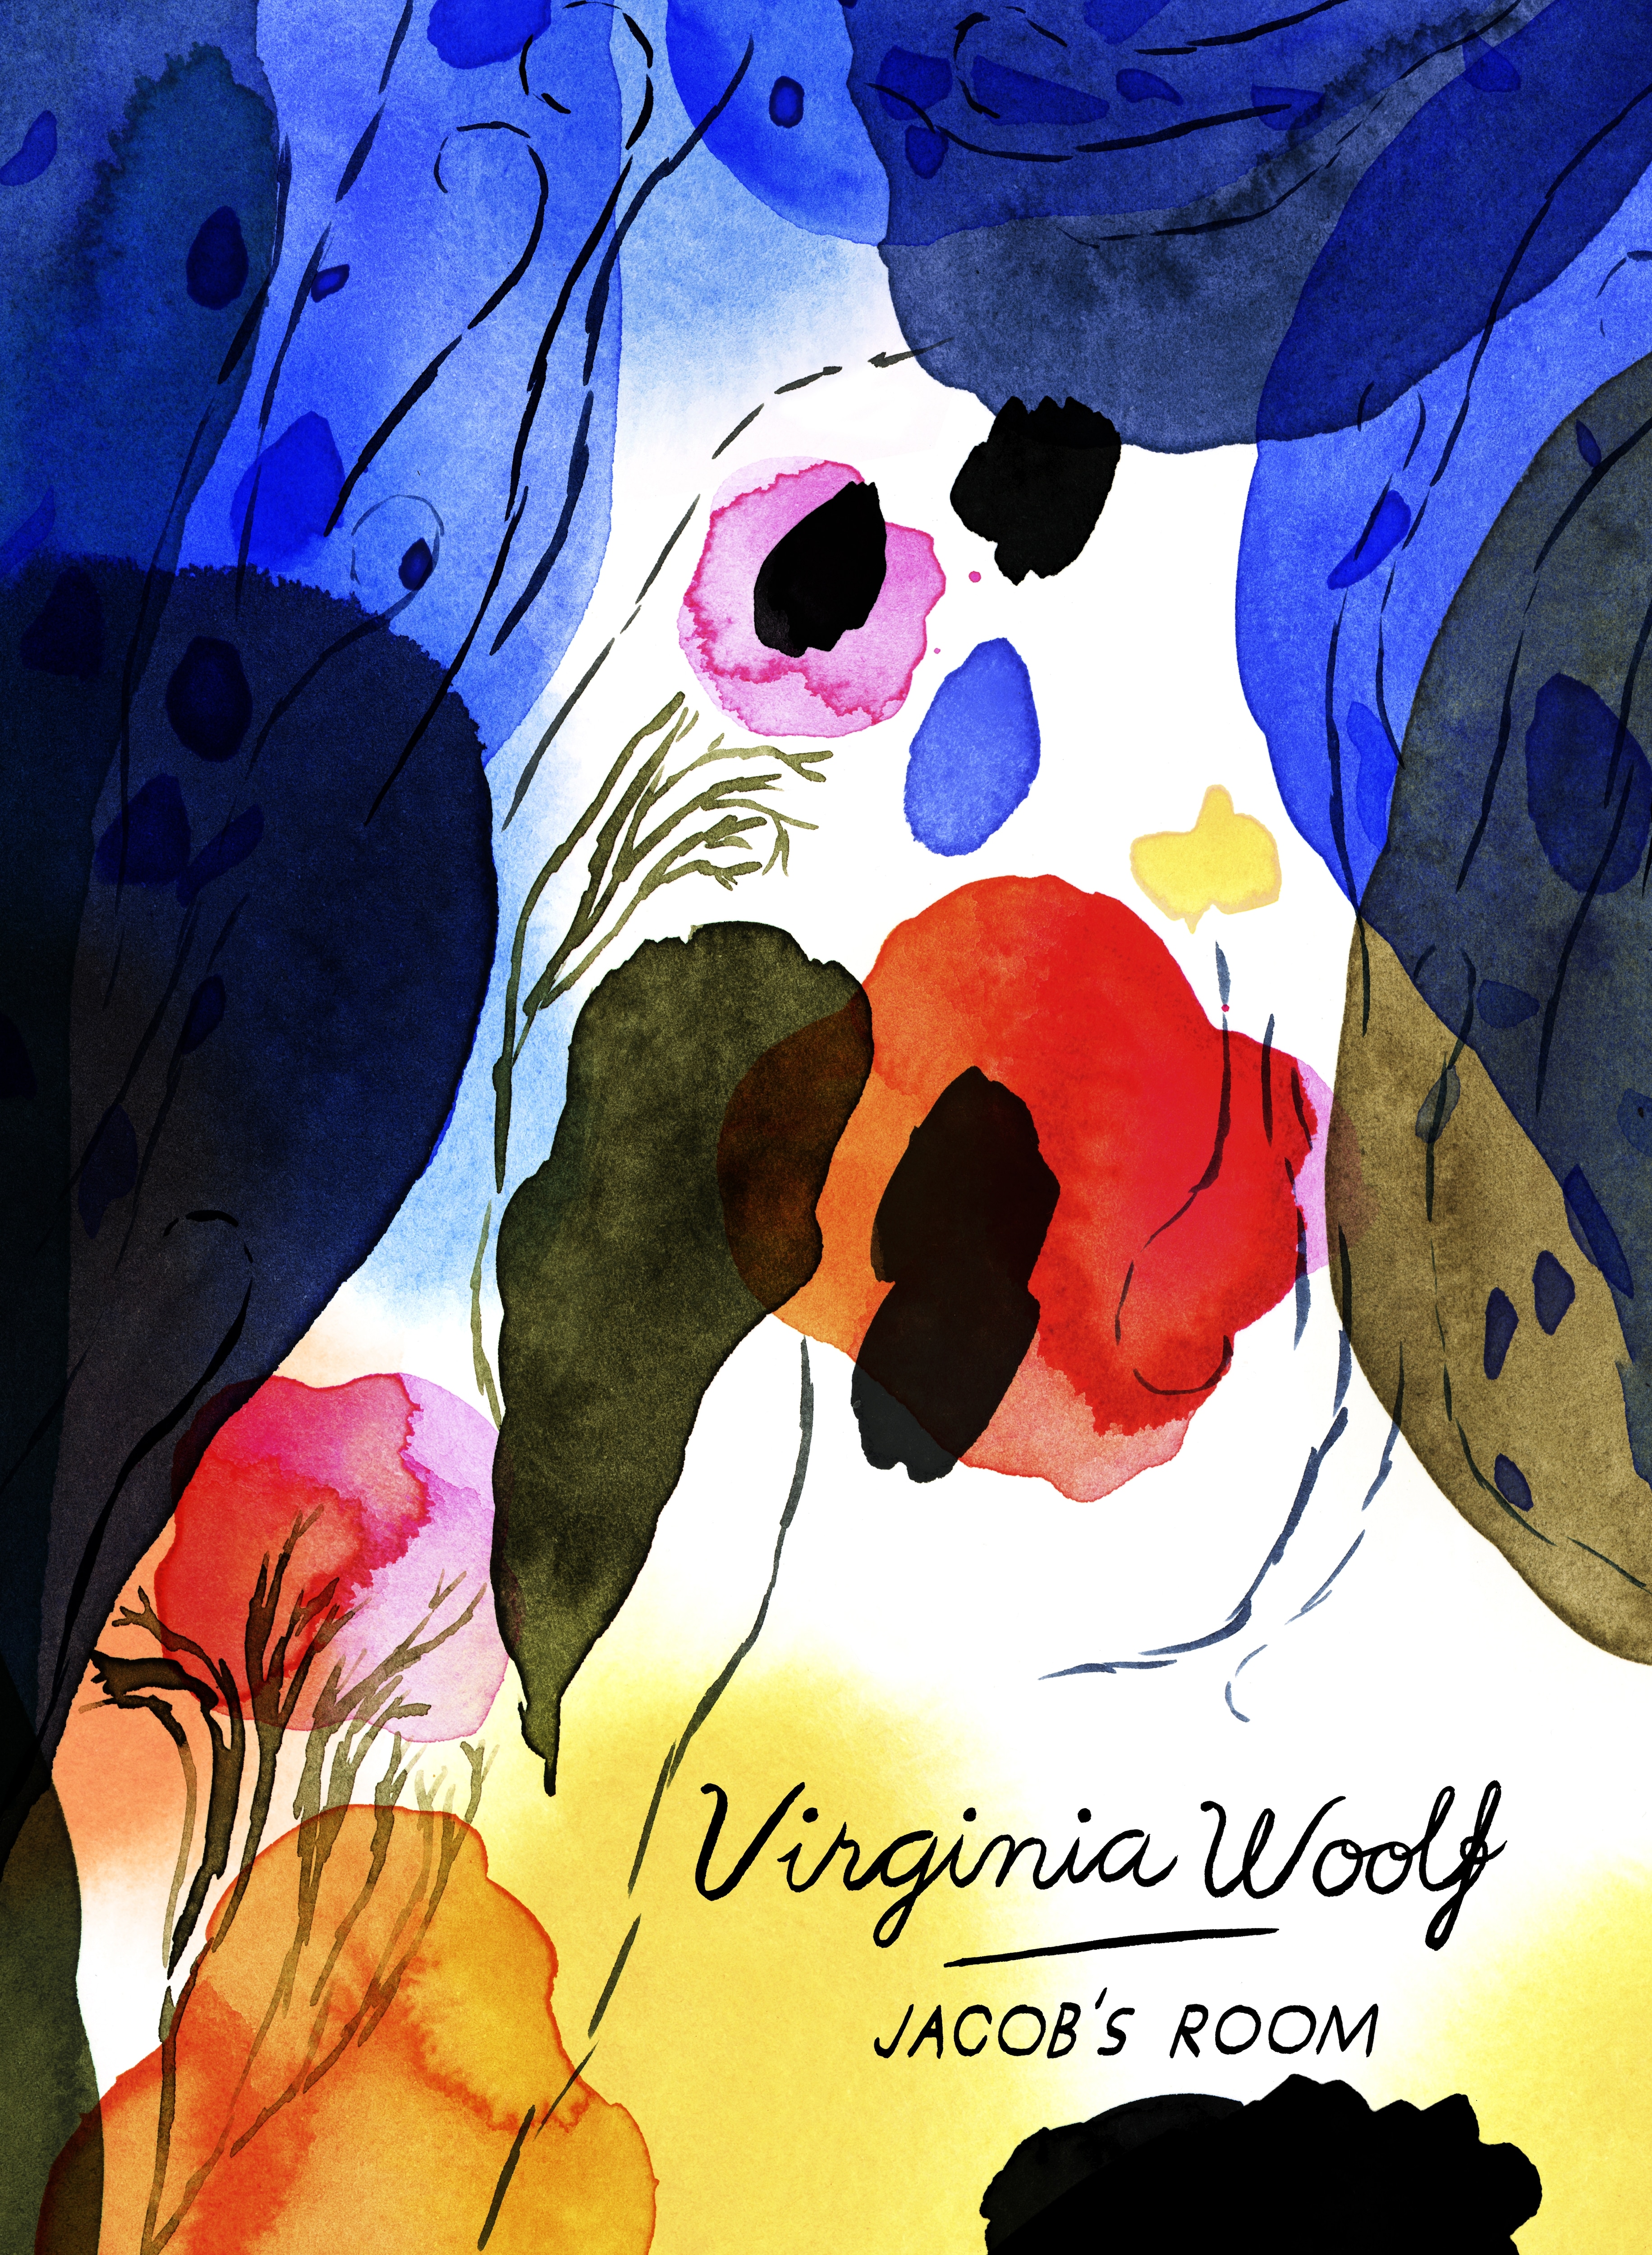 Book “Jacob's Room” by Virginia Woolf